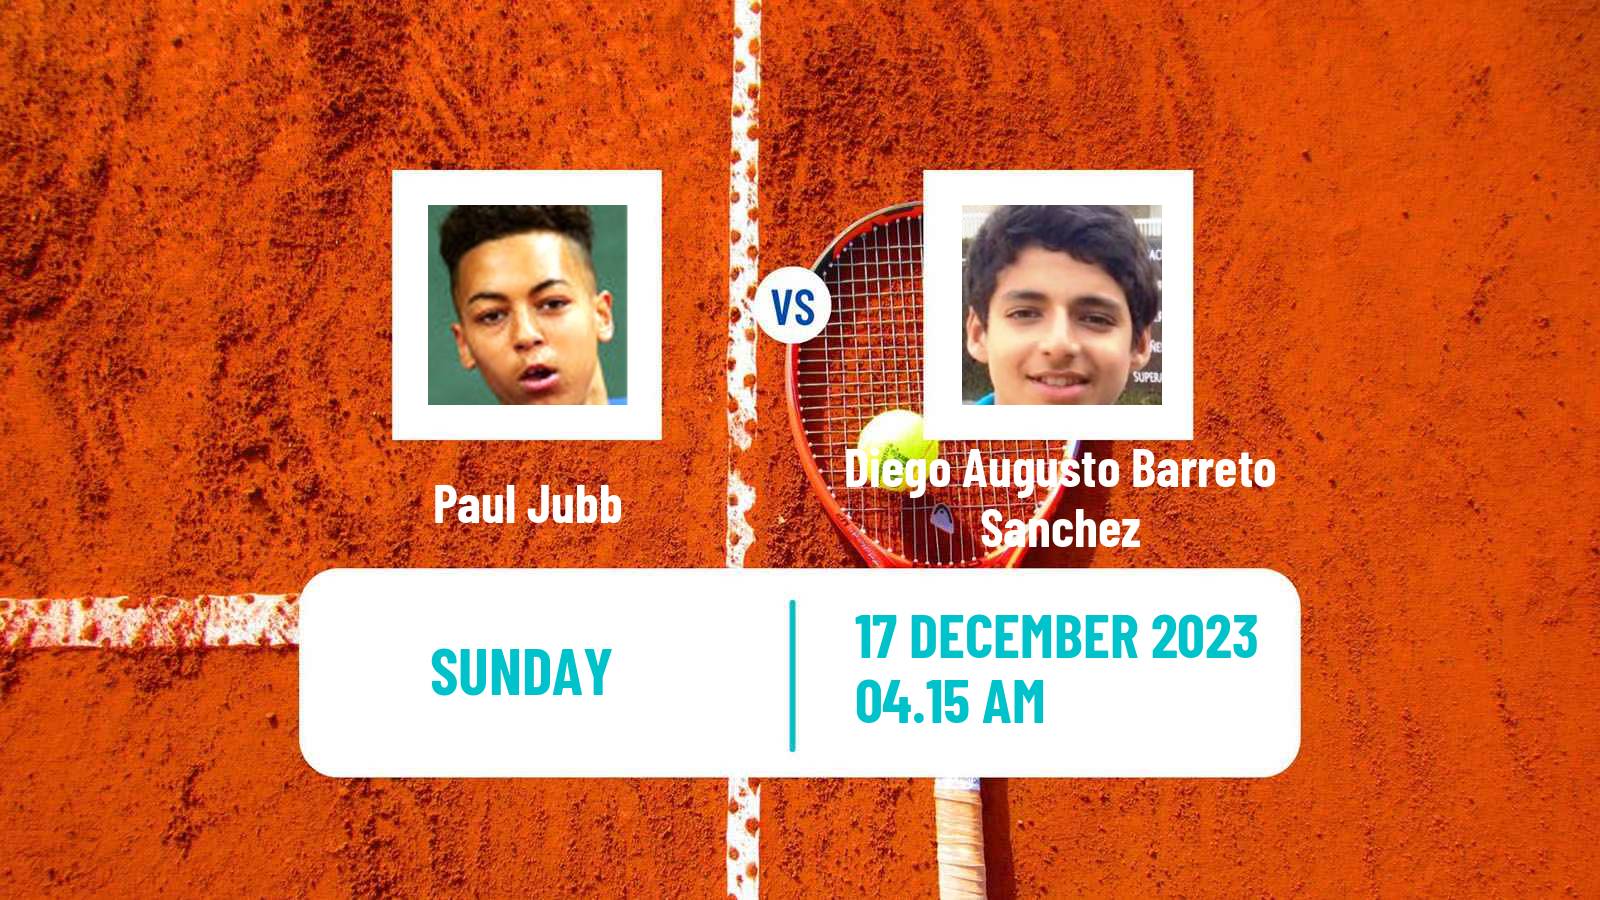 Tennis ITF M15 Ceuta Men Paul Jubb - Diego Augusto Barreto Sanchez